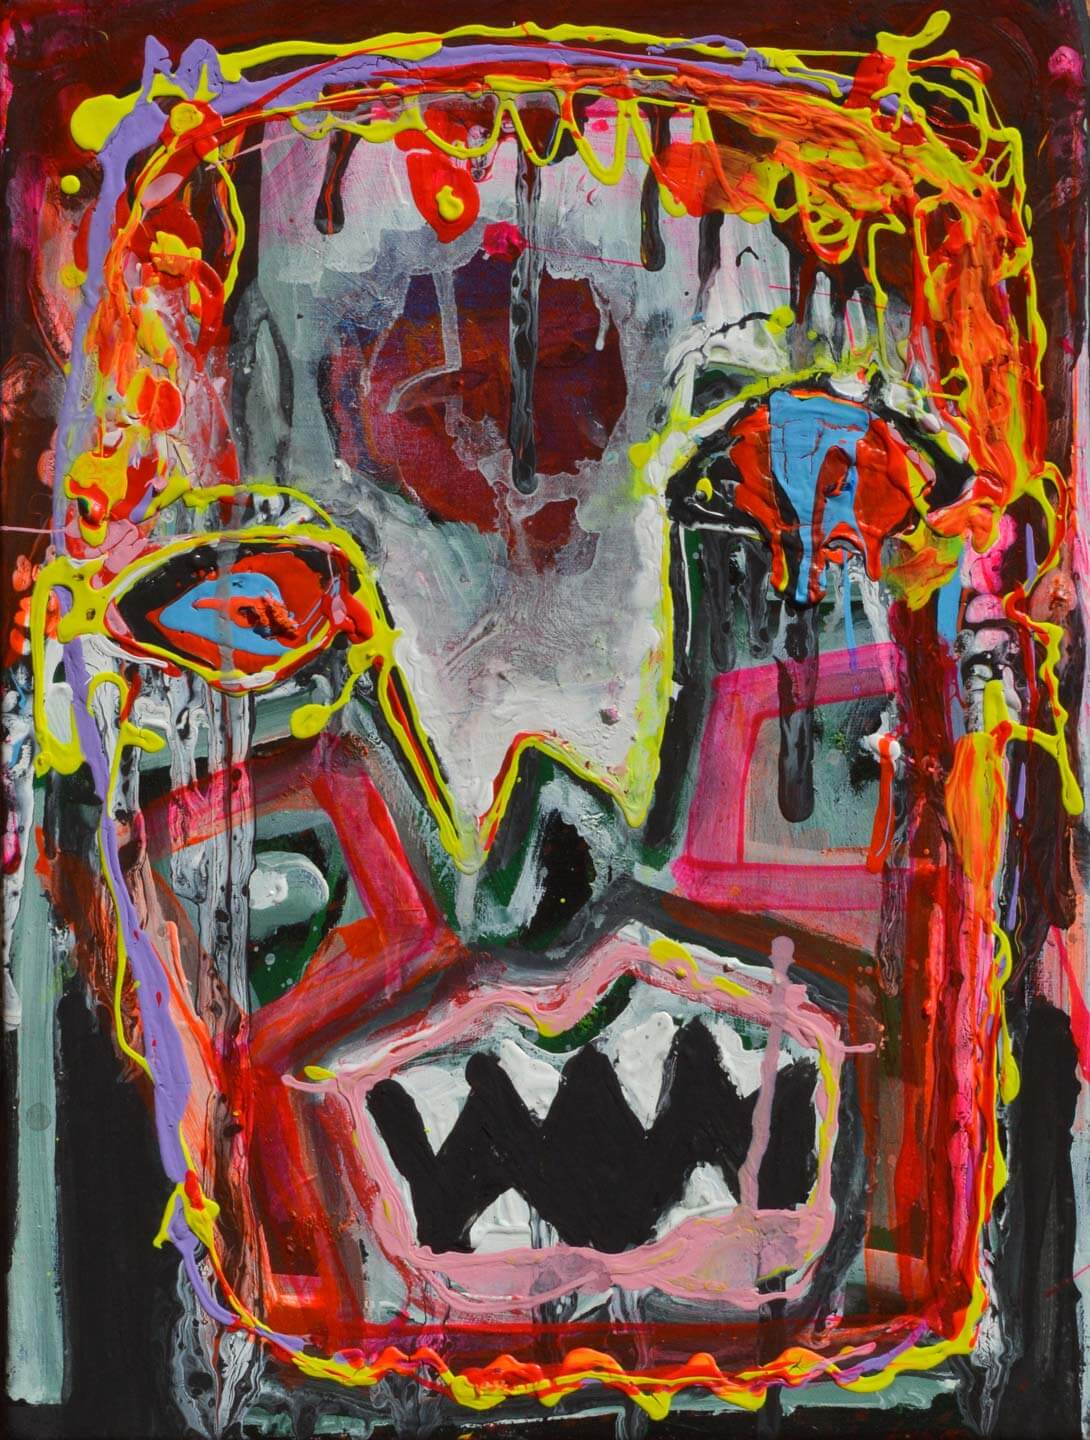 Juan Mariño, Venezuela. Hallucinating by hunger, 2018. Acrylic on canvas, 11” x 15”